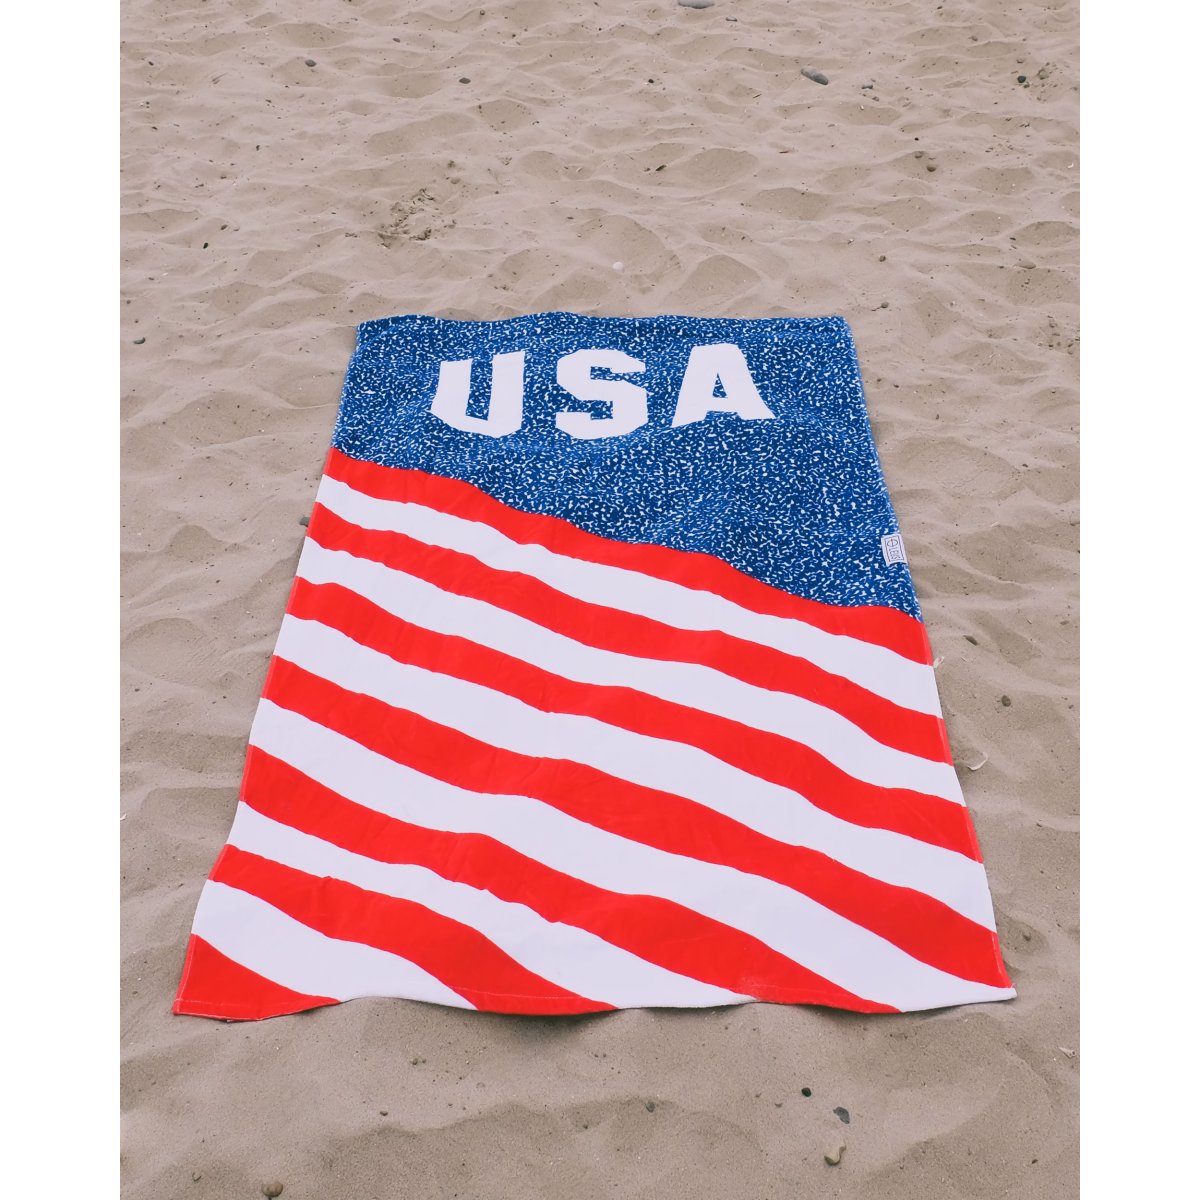 USA Surfing Olympic Beach ECO Towel